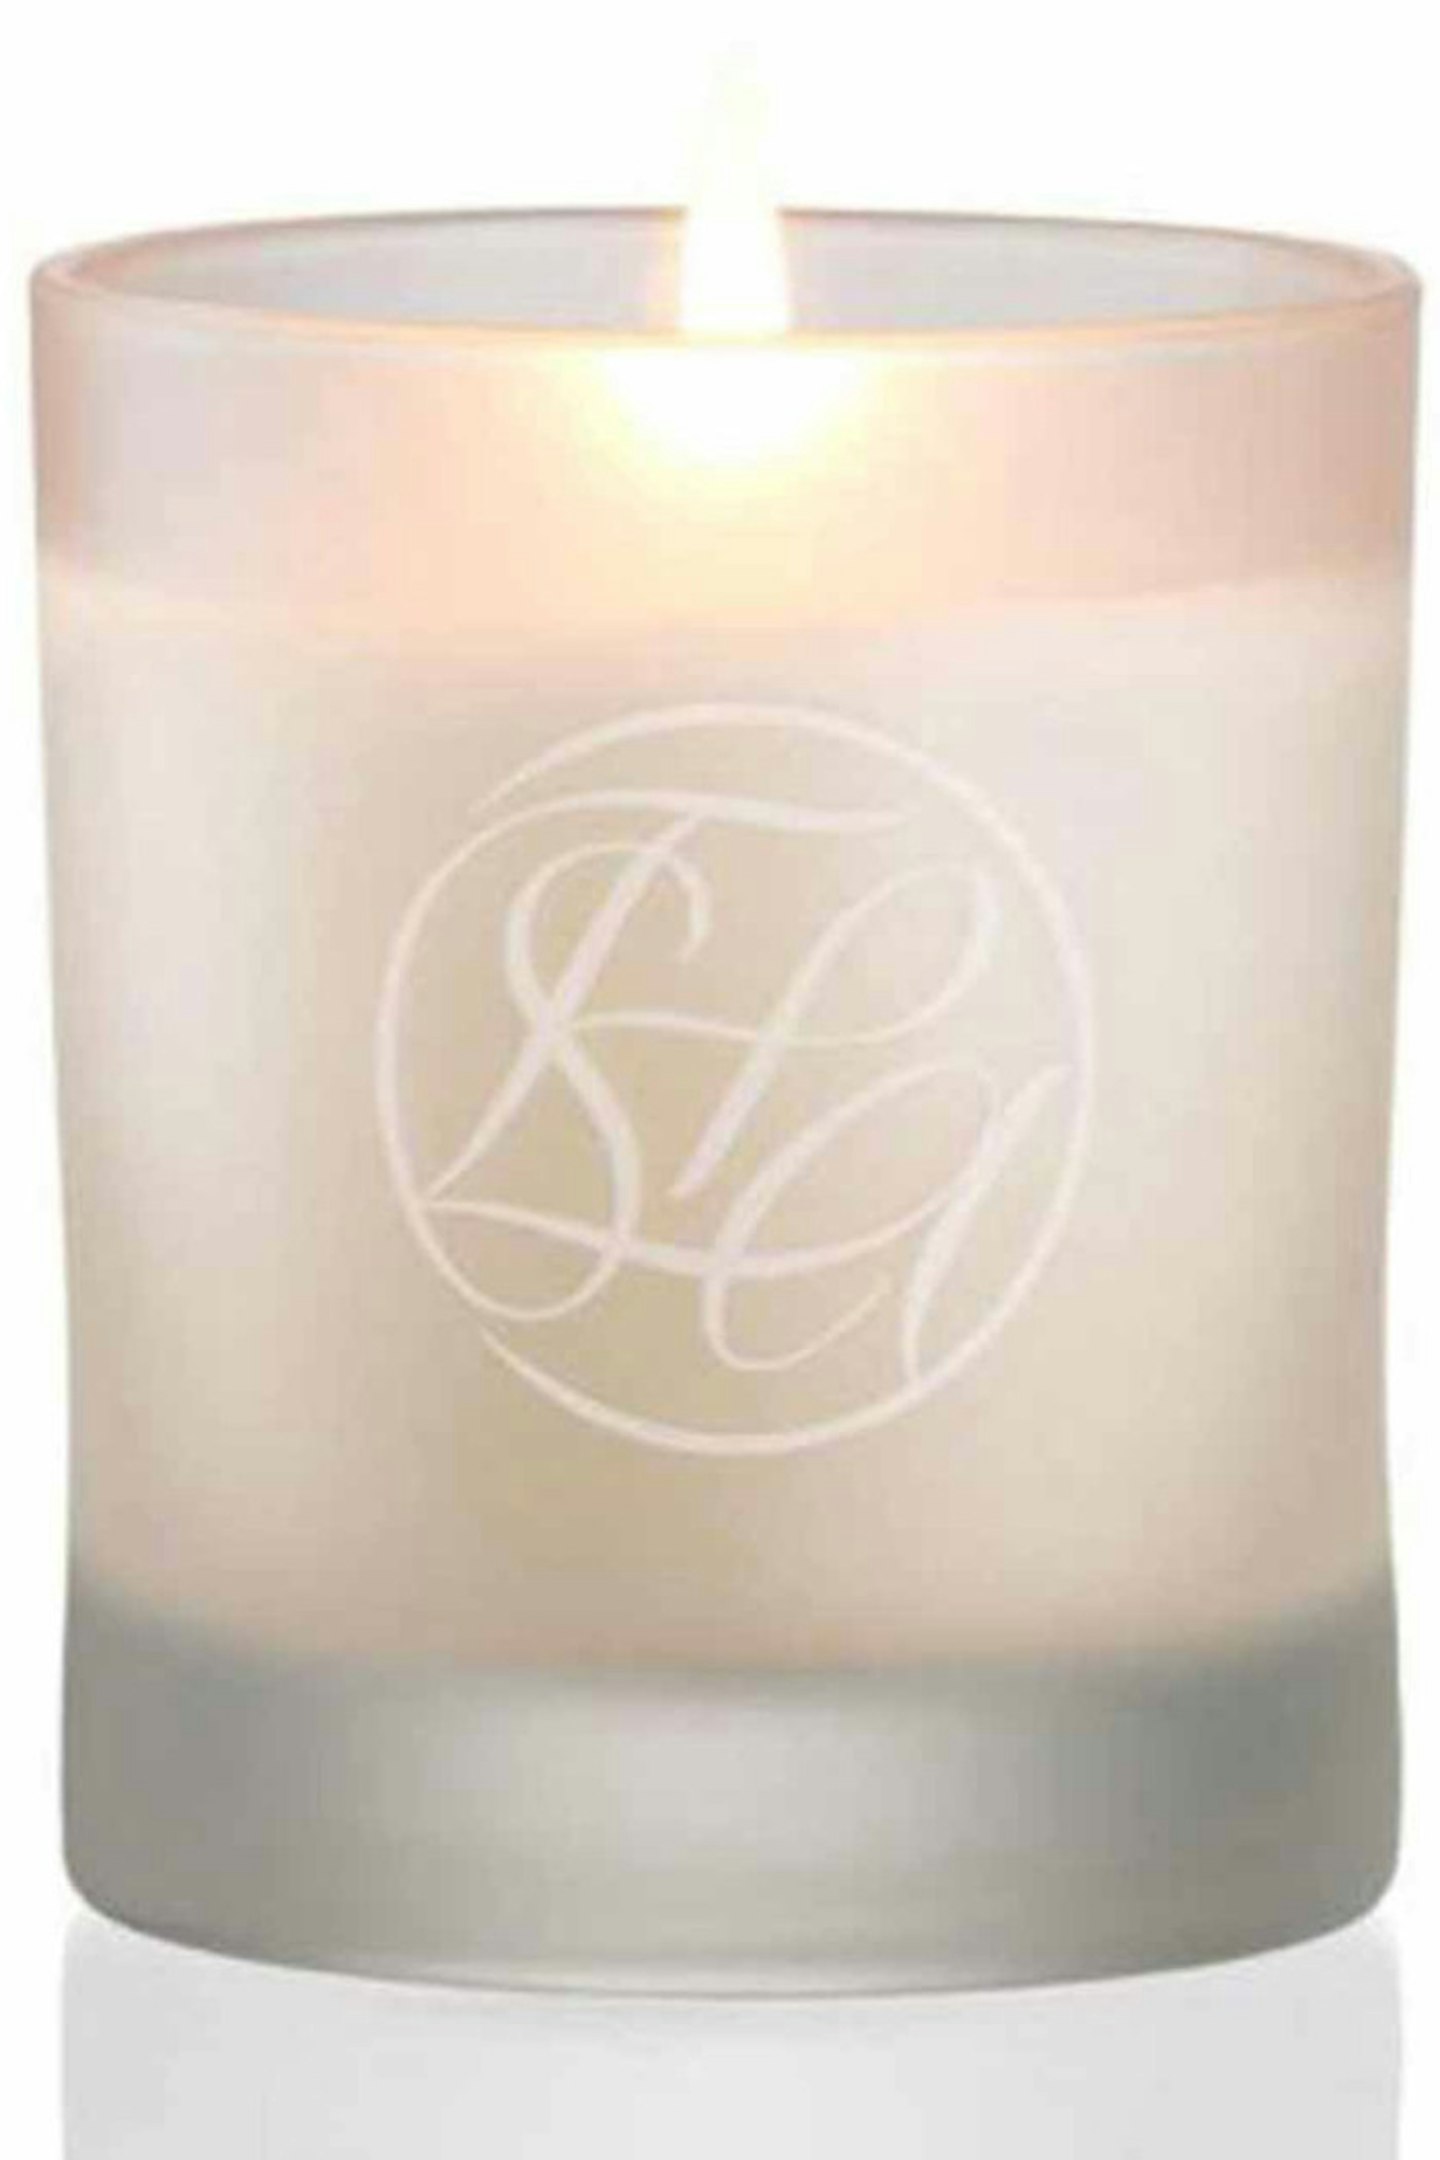 2. ESPA Restorative Aromatic Candle, £22.50